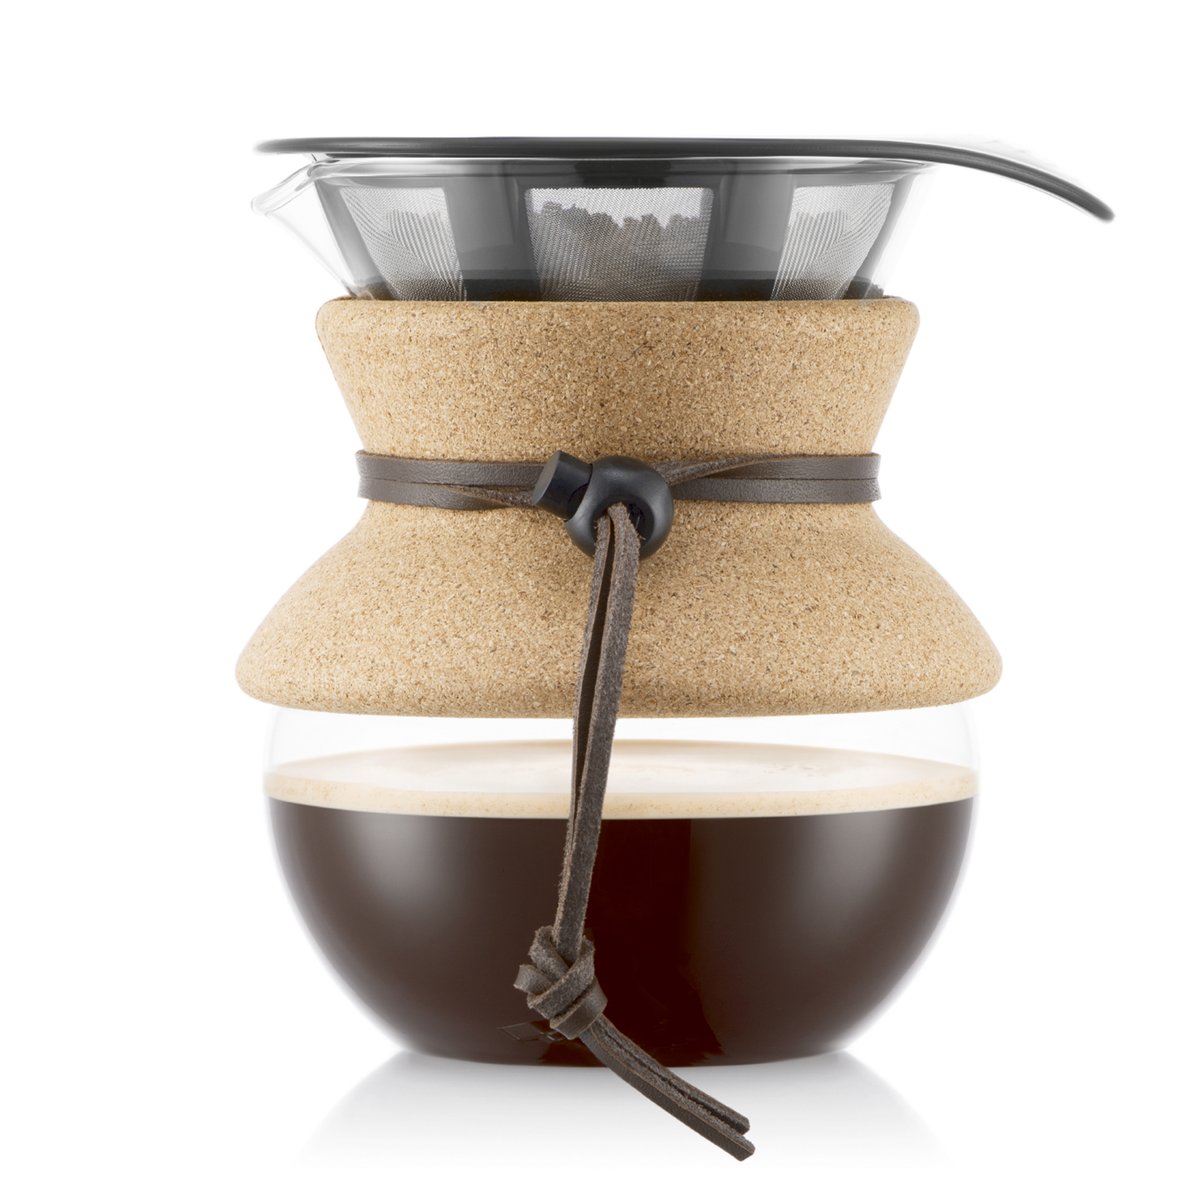 Bodum Pour Over kaffebryggare med evighetsfilter 50 cl